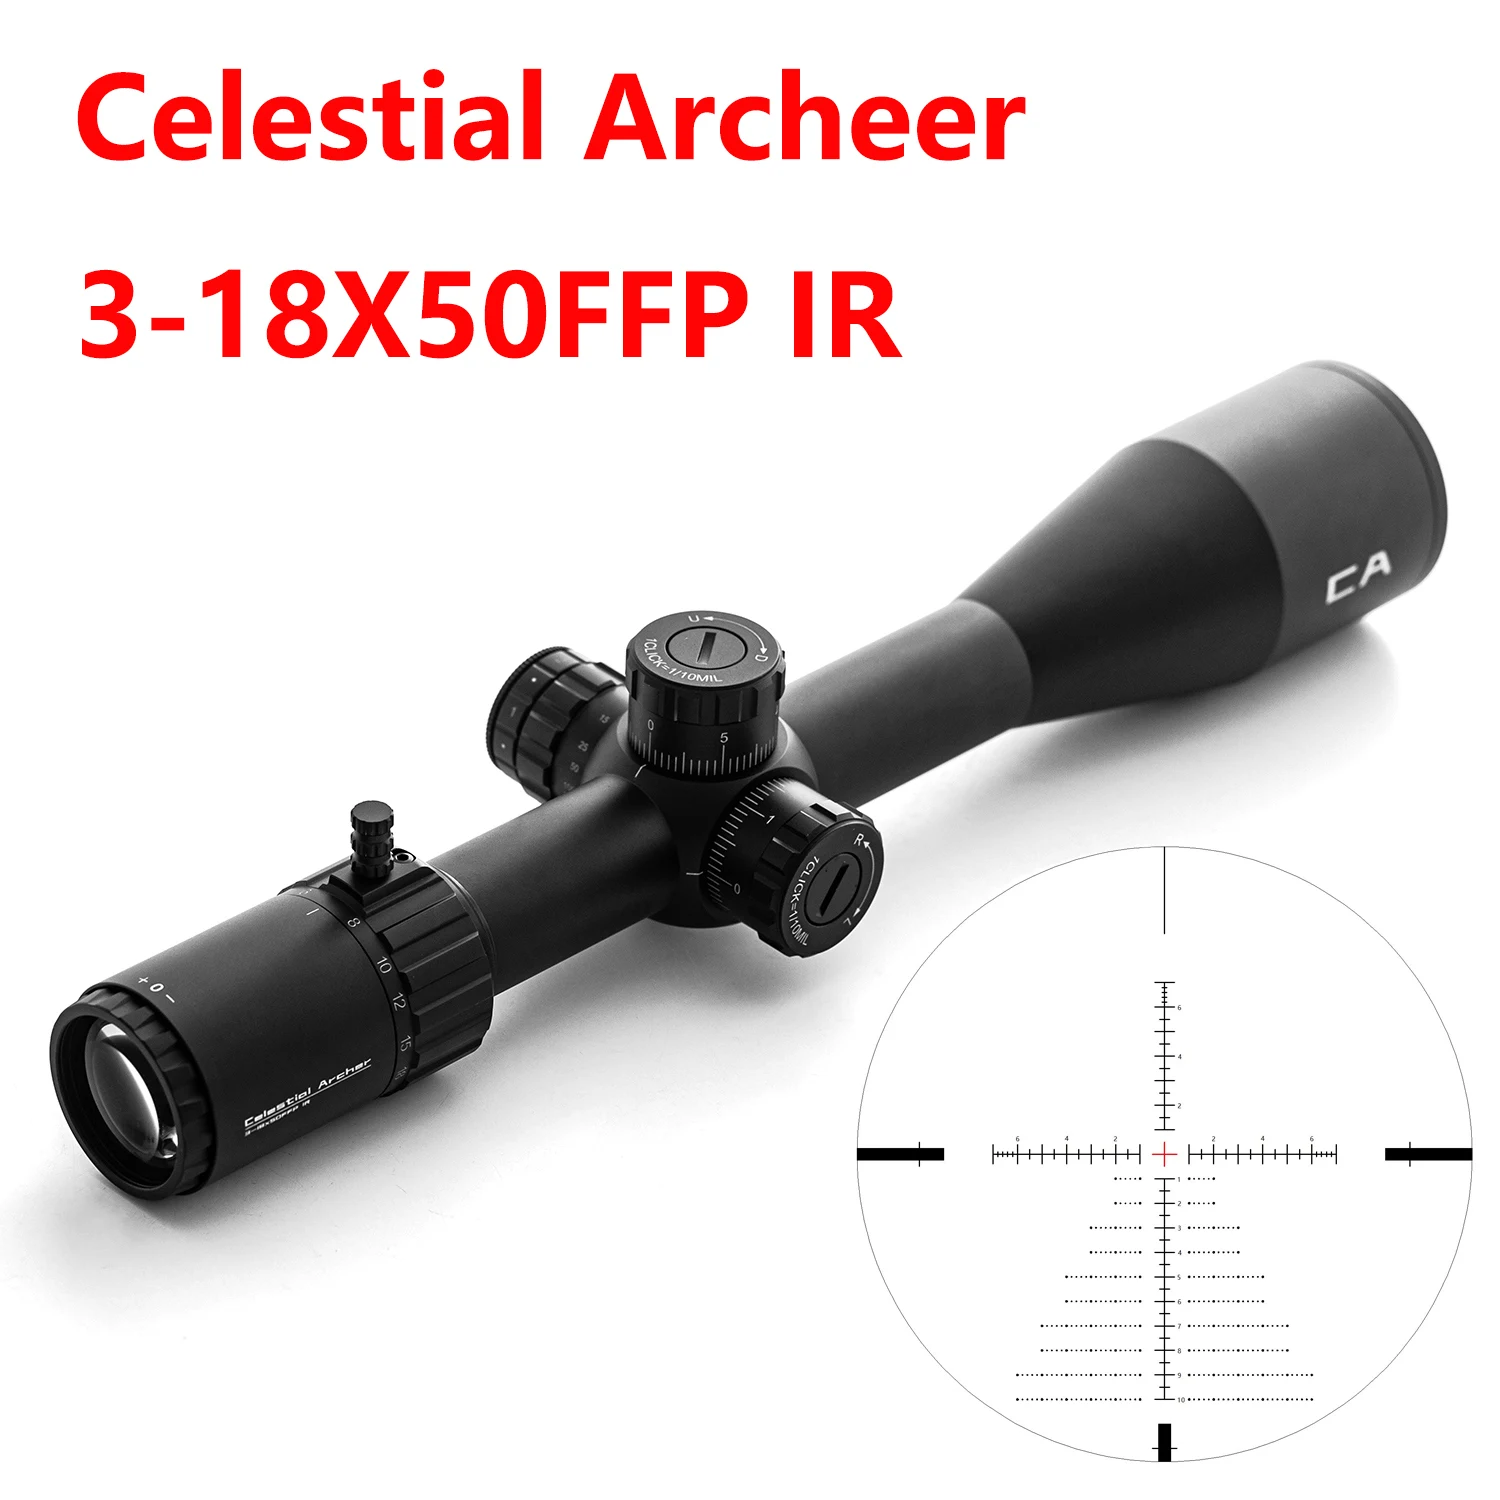 

Tactical Optics 3-18x50 FFP IR Long Eye Relief Riflescope Hunting Red Green Illuminated 30mm Rifle Scope 1/10 MIL Turret Lock